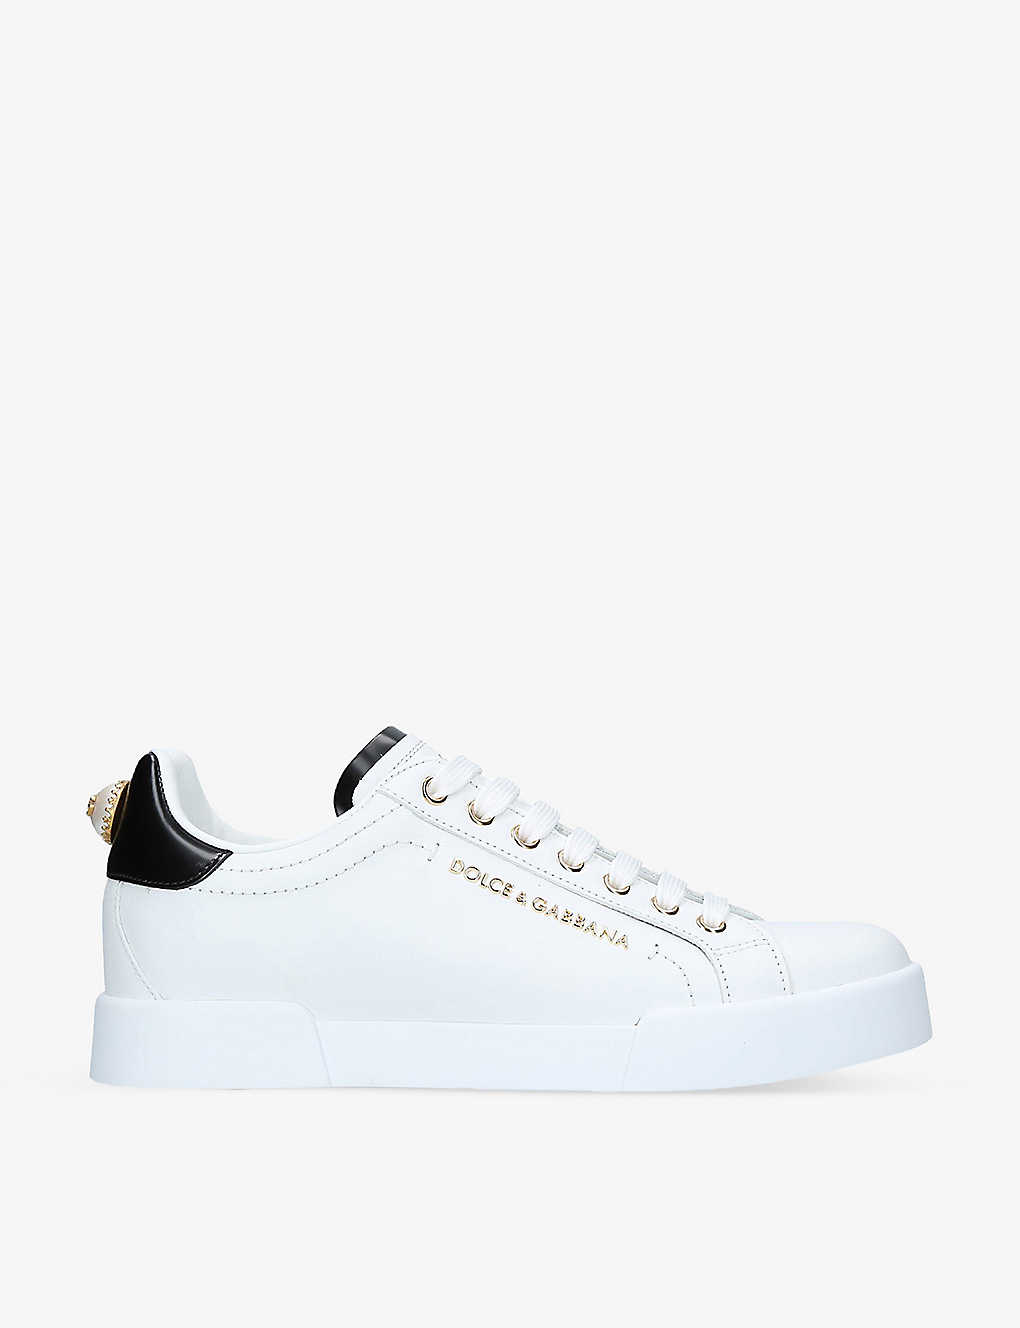 Dolce & Gabbana Portofino Light Leather Low-top Trainers In White/comb